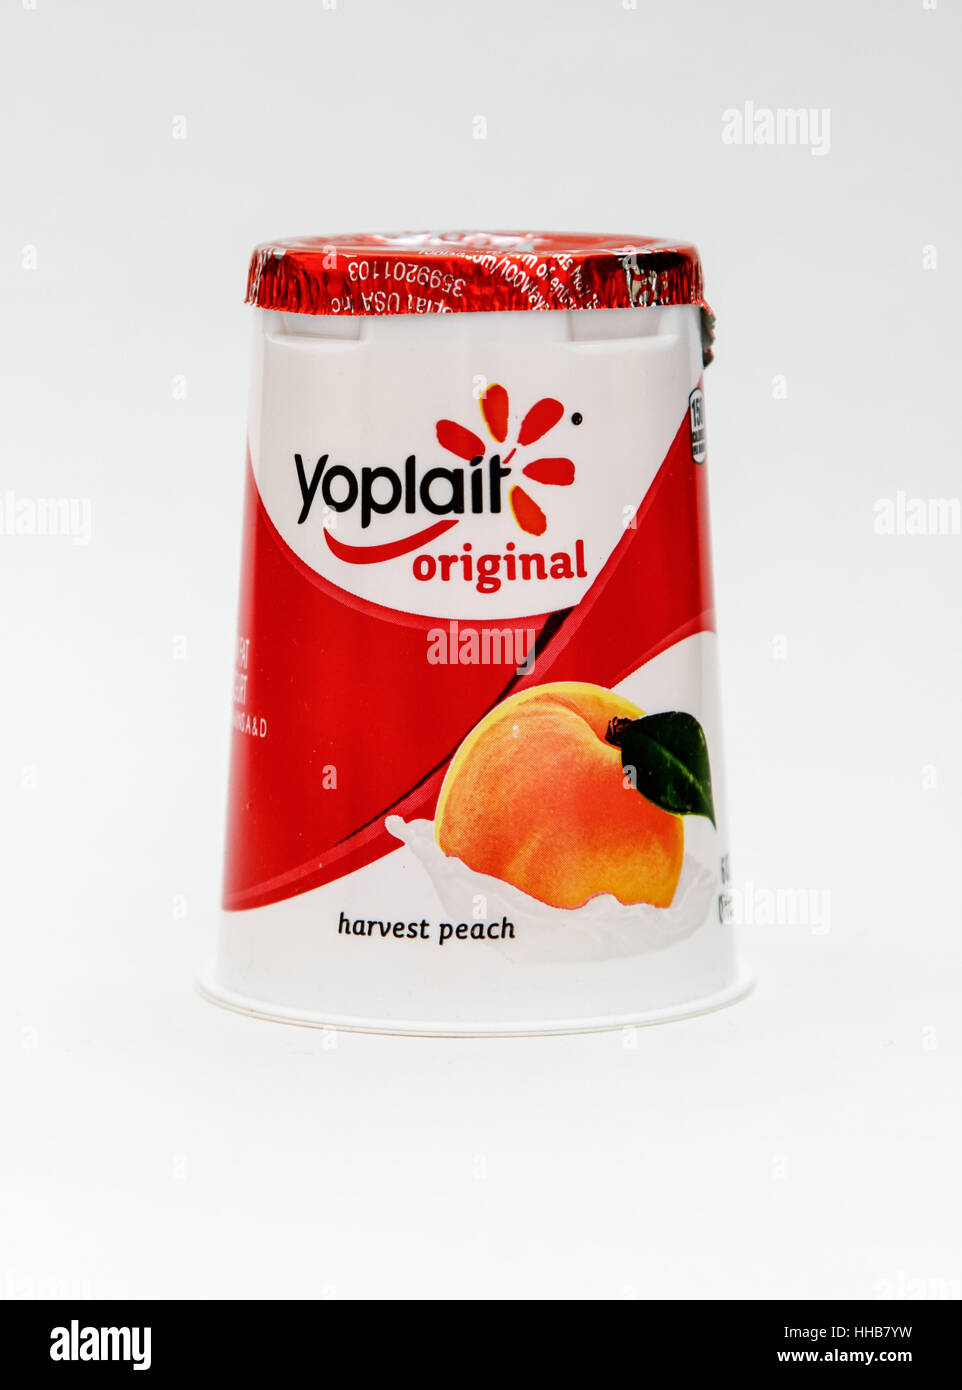 A peach flavored Yoplait yogurt is seen against white background. Stock Photo